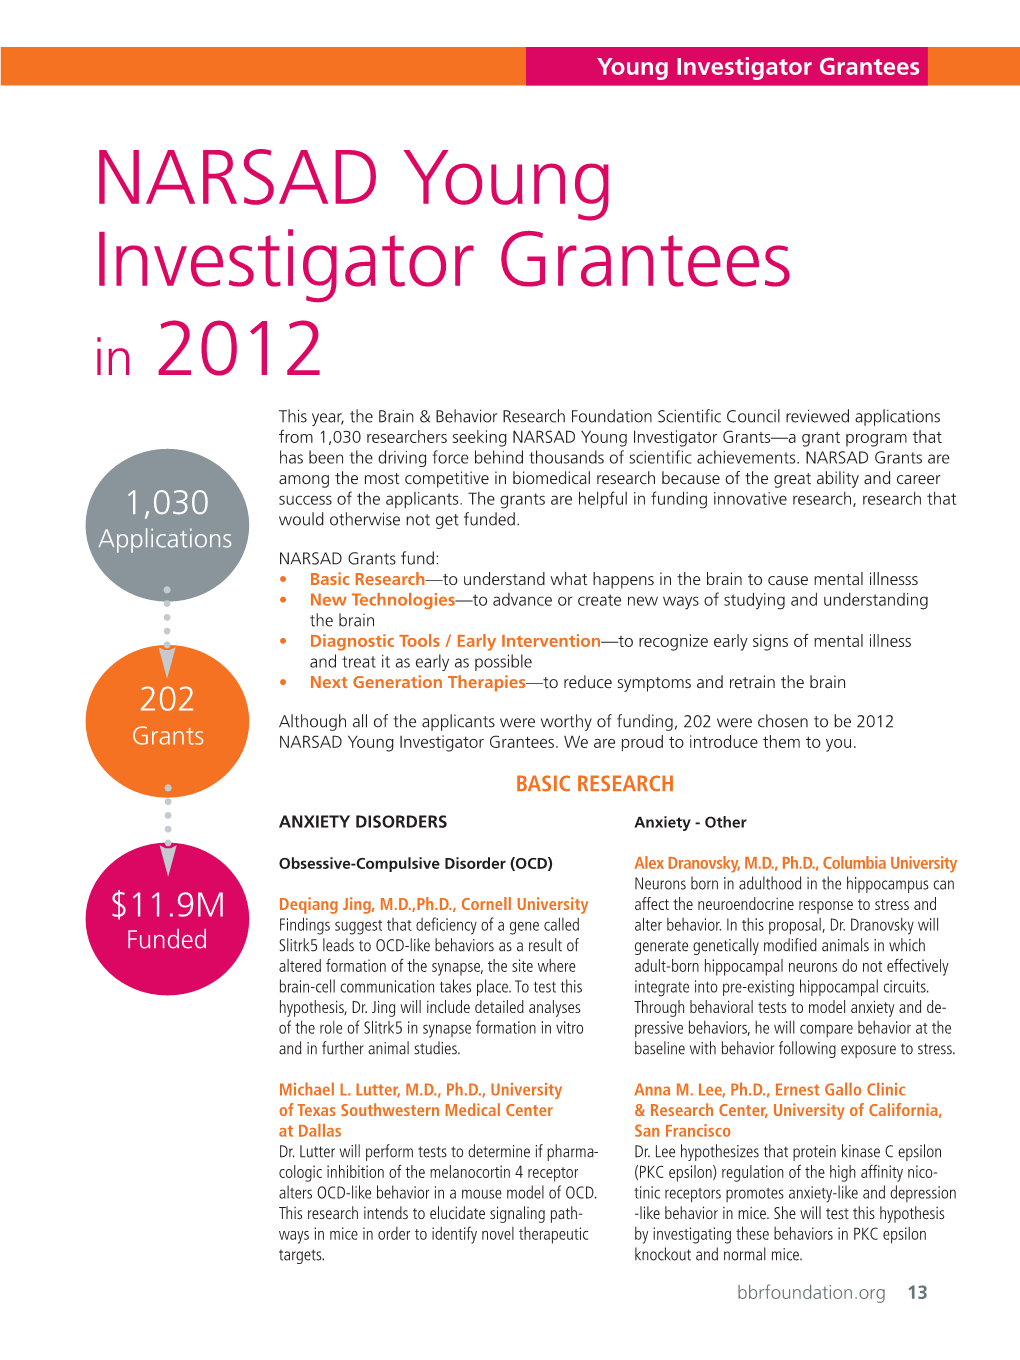 NARSAD Young Investigator Grantees in 2012